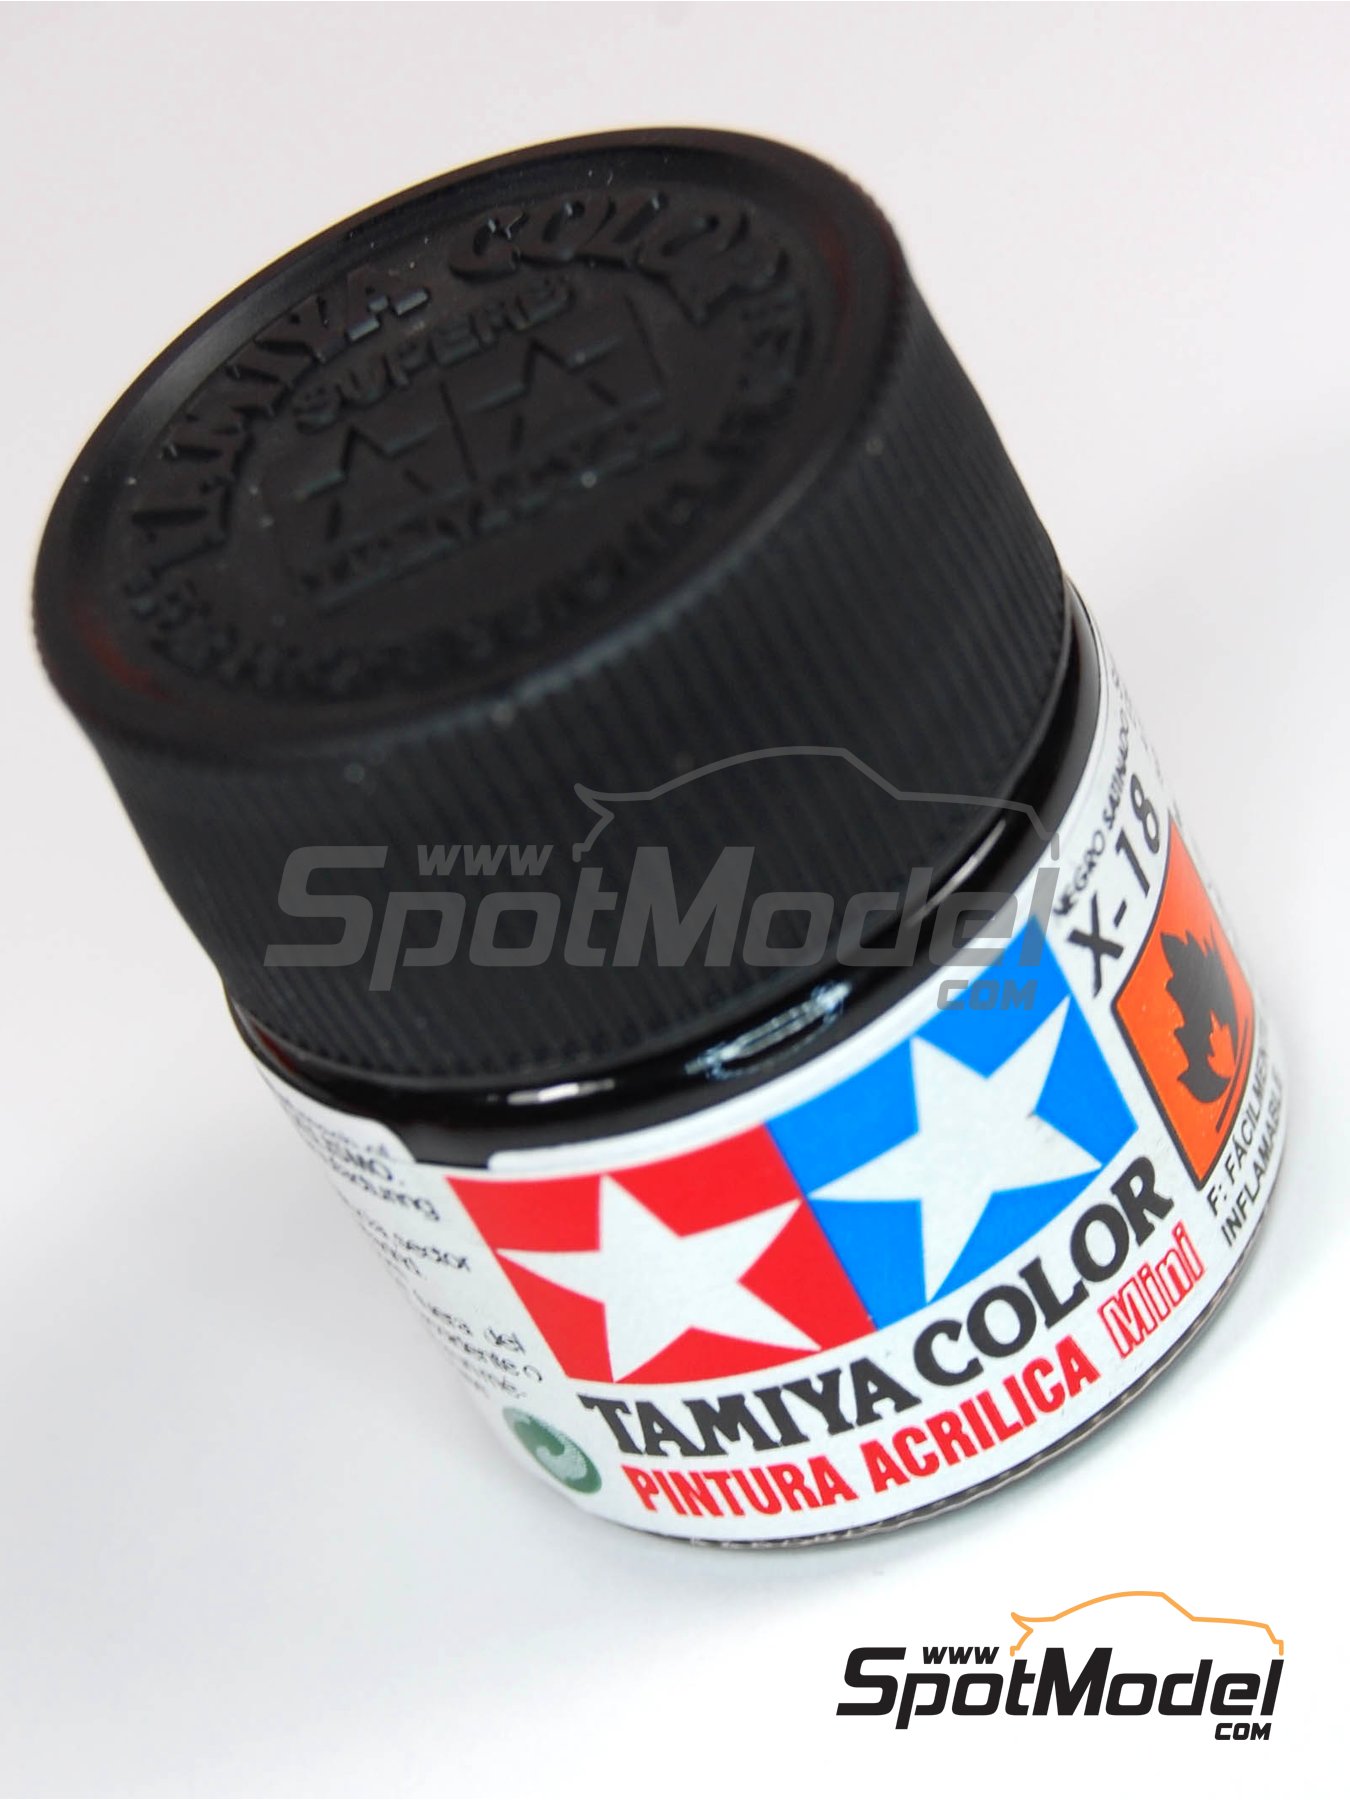 Tamiya 81501 Acrylic Mini X-1 Black